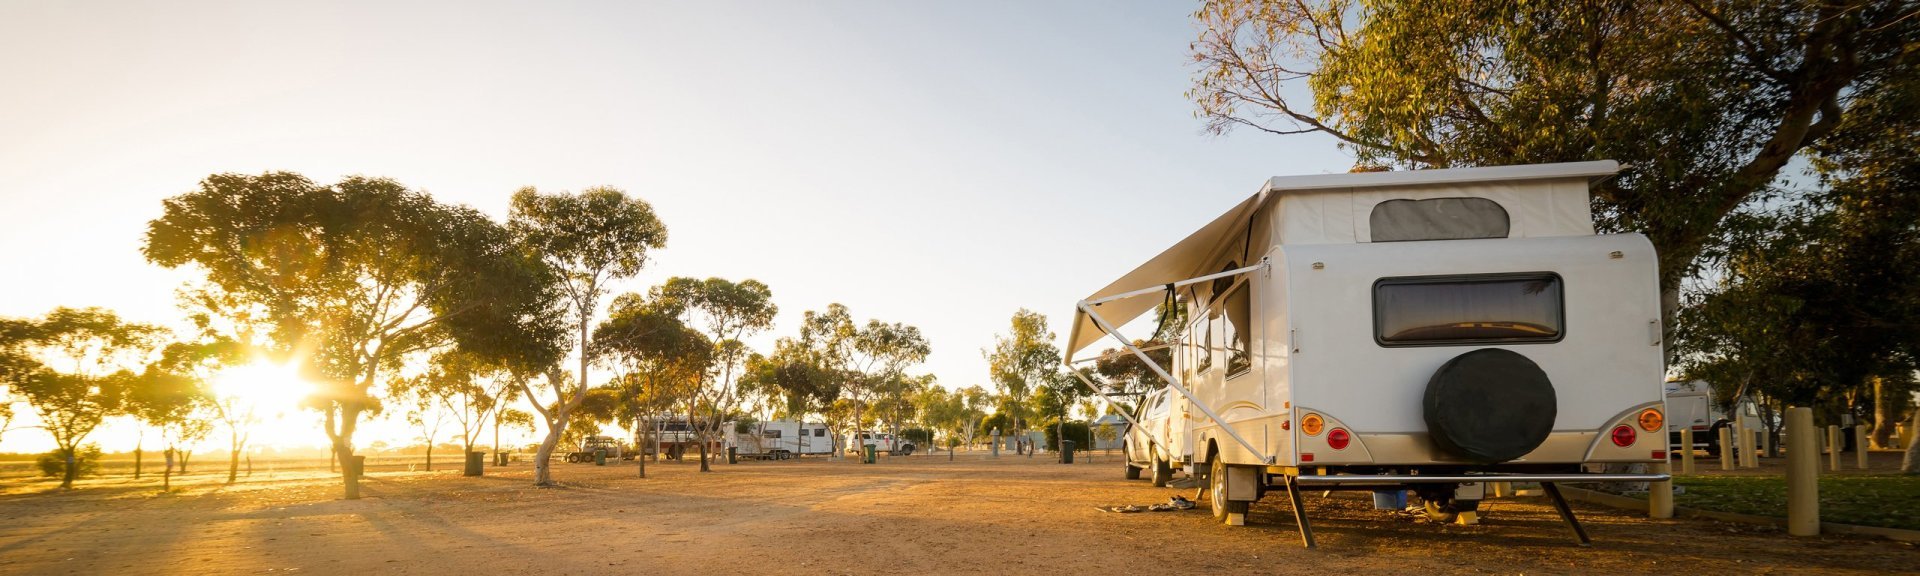 Kakadu national park camping @Parks Australia